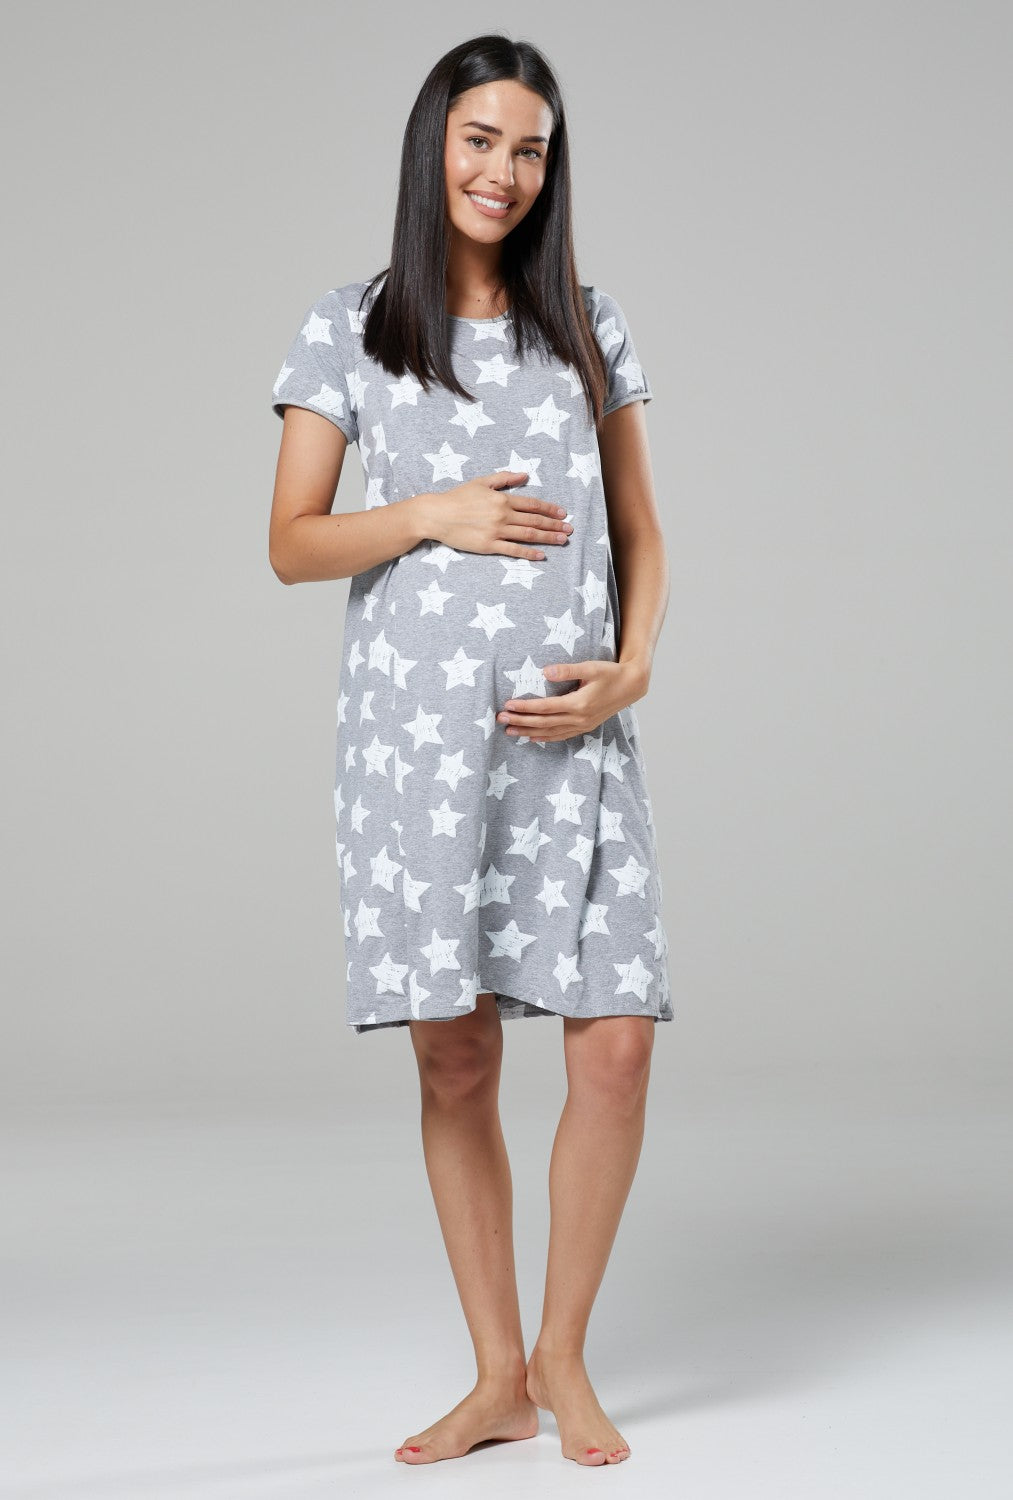 Maternity Nursing Hospital Gown